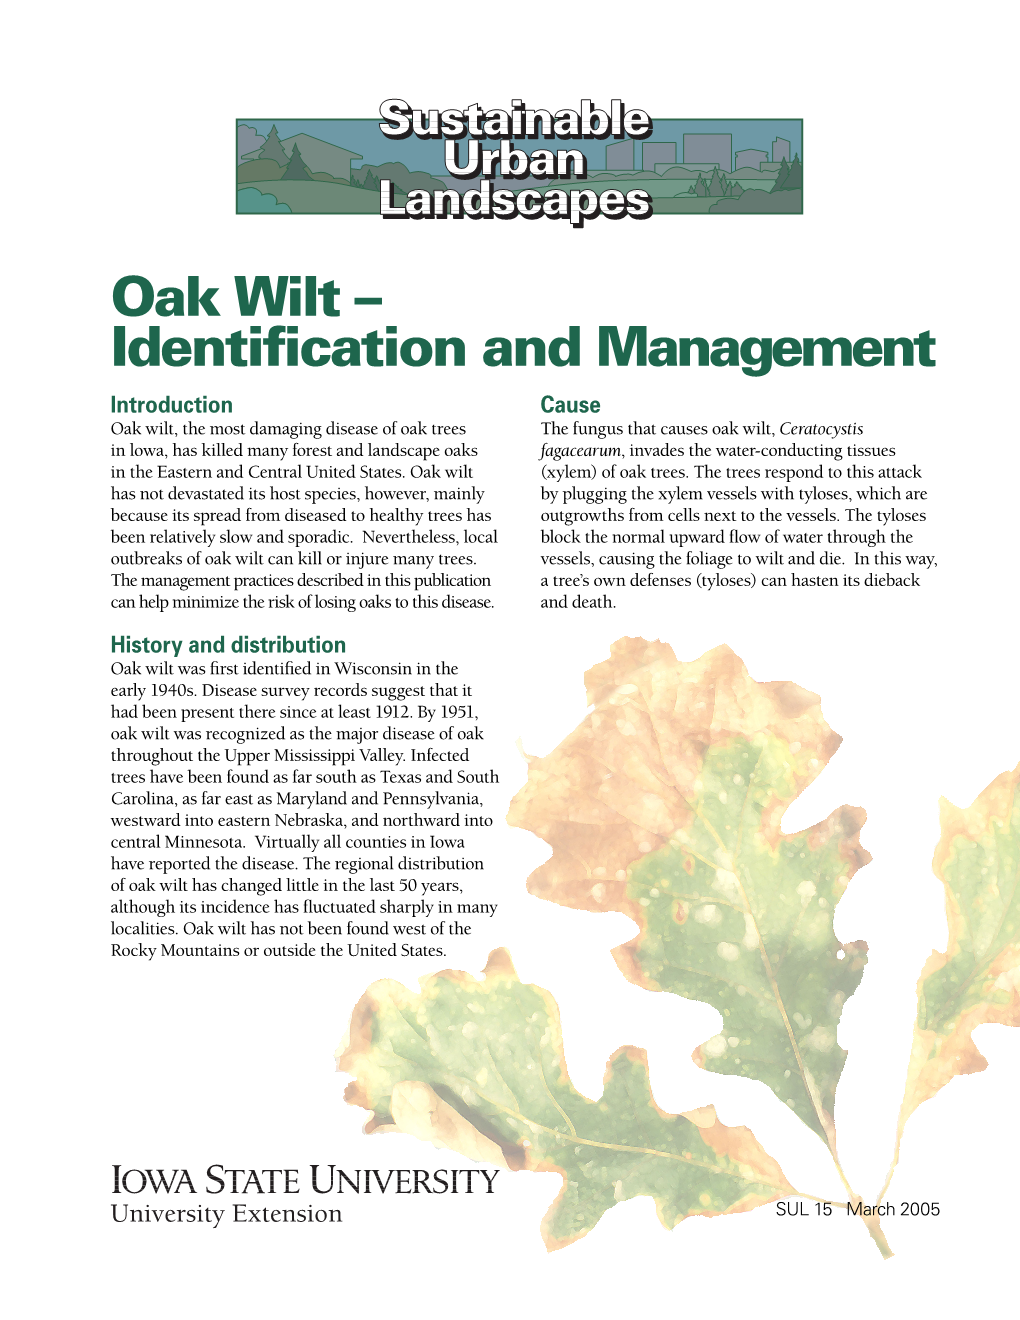 Oak Wilt -- Identification and Management